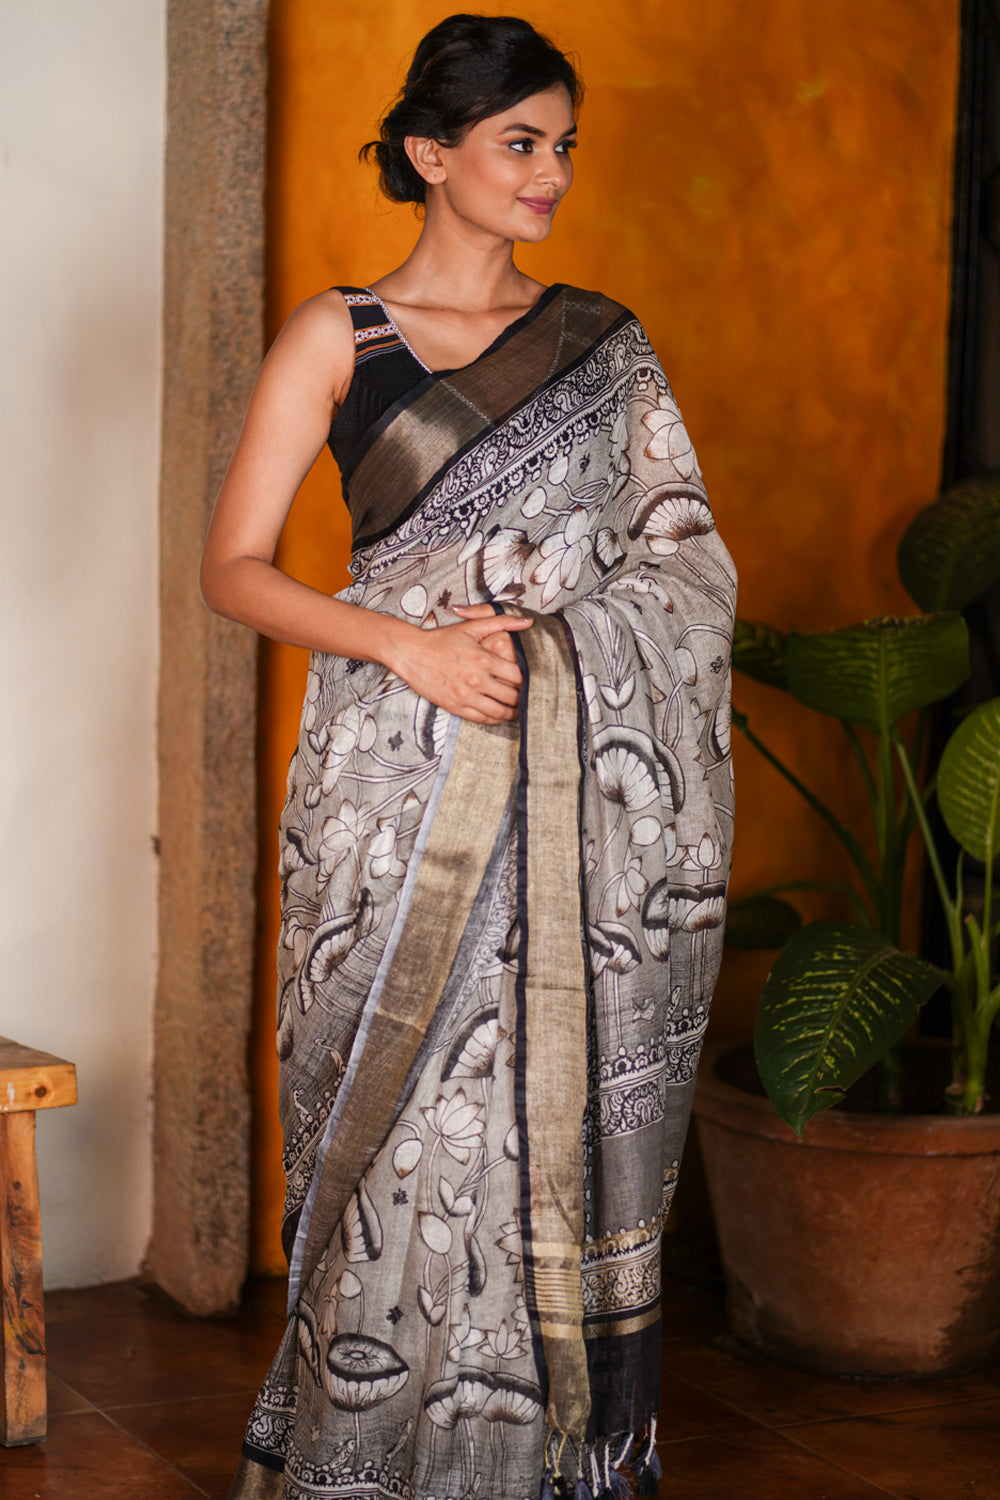 Kalamkari DigitaI Print on Pure Linen by Linen Saree in Gray